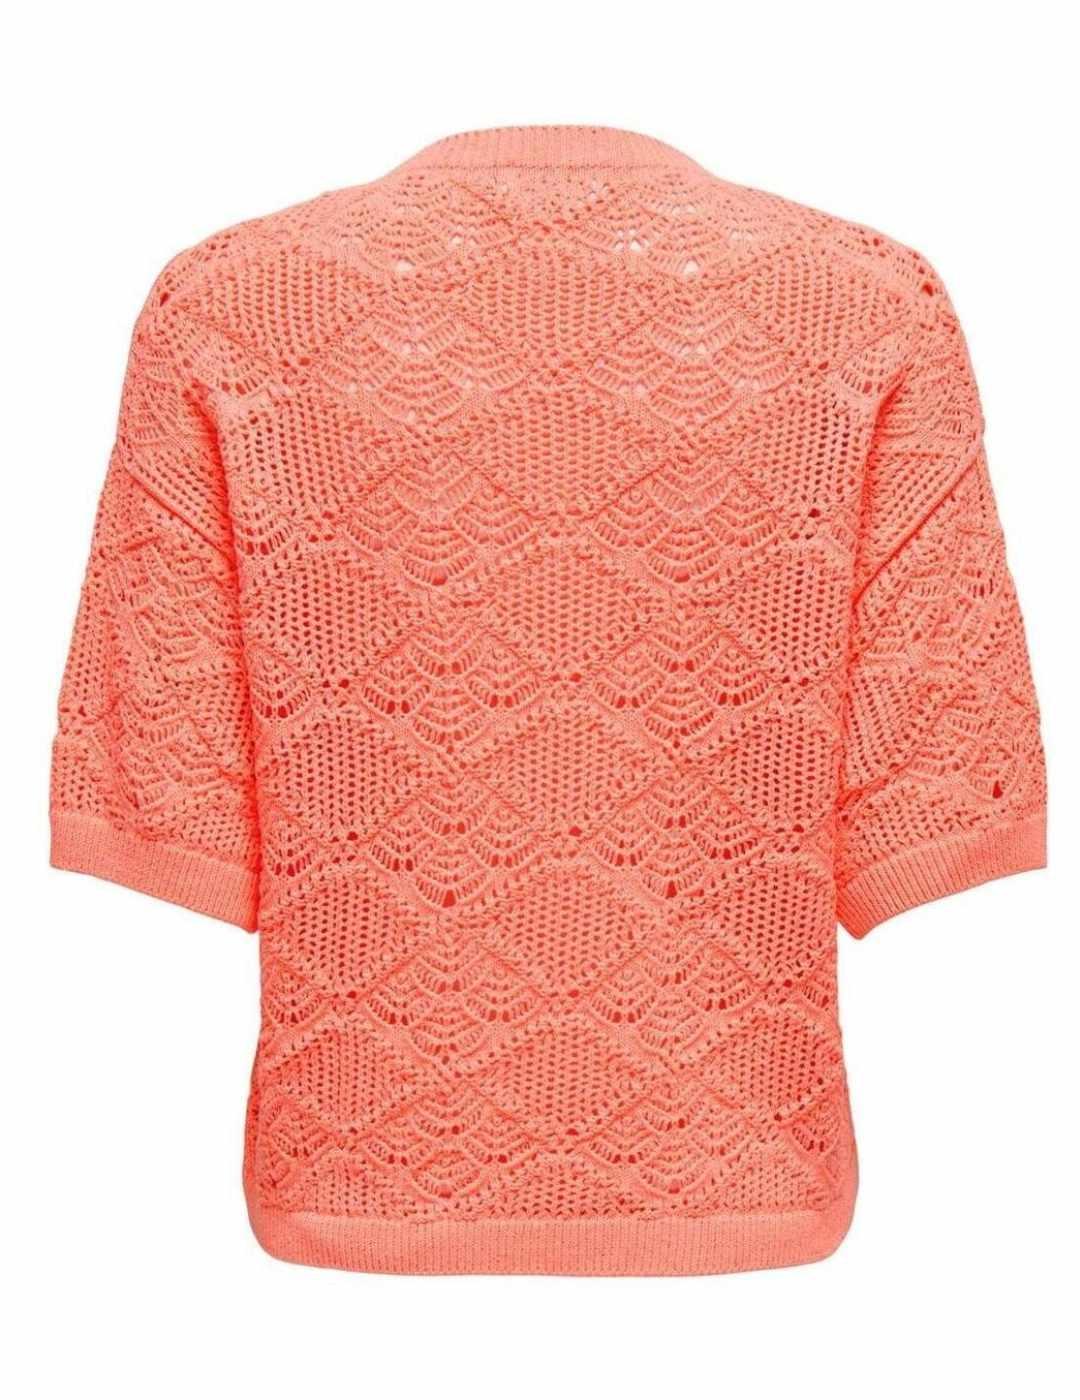 Camiseta crochet Only Lydia coral manga 3/4 para mujer